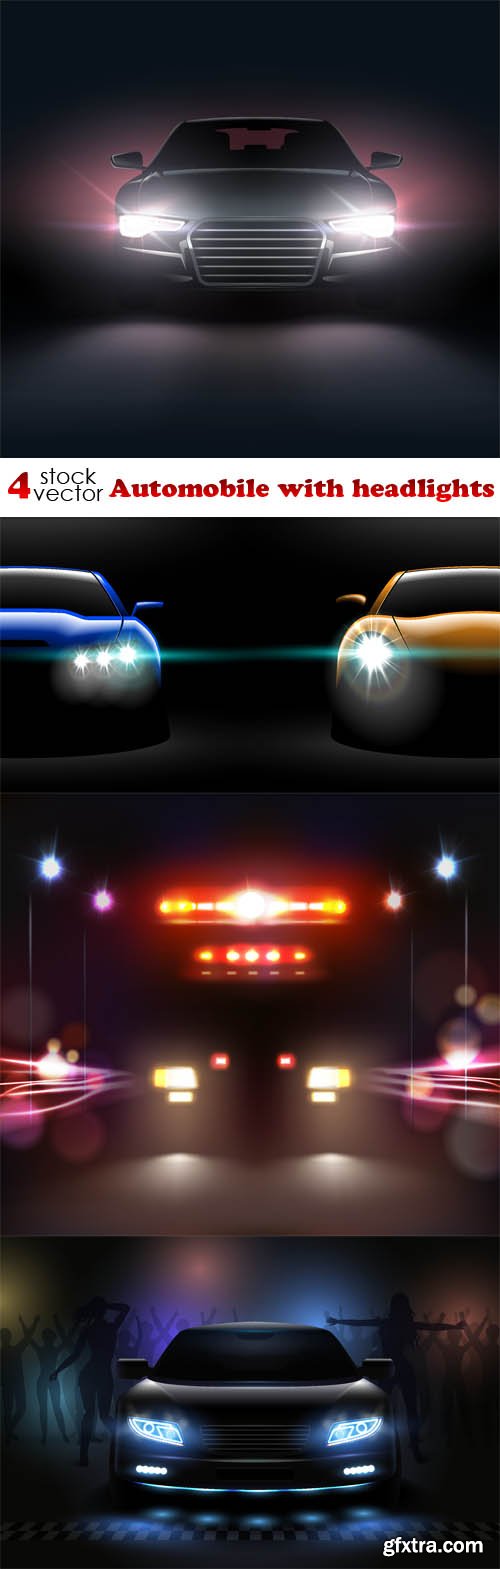 Vectors - Automobile with headlights